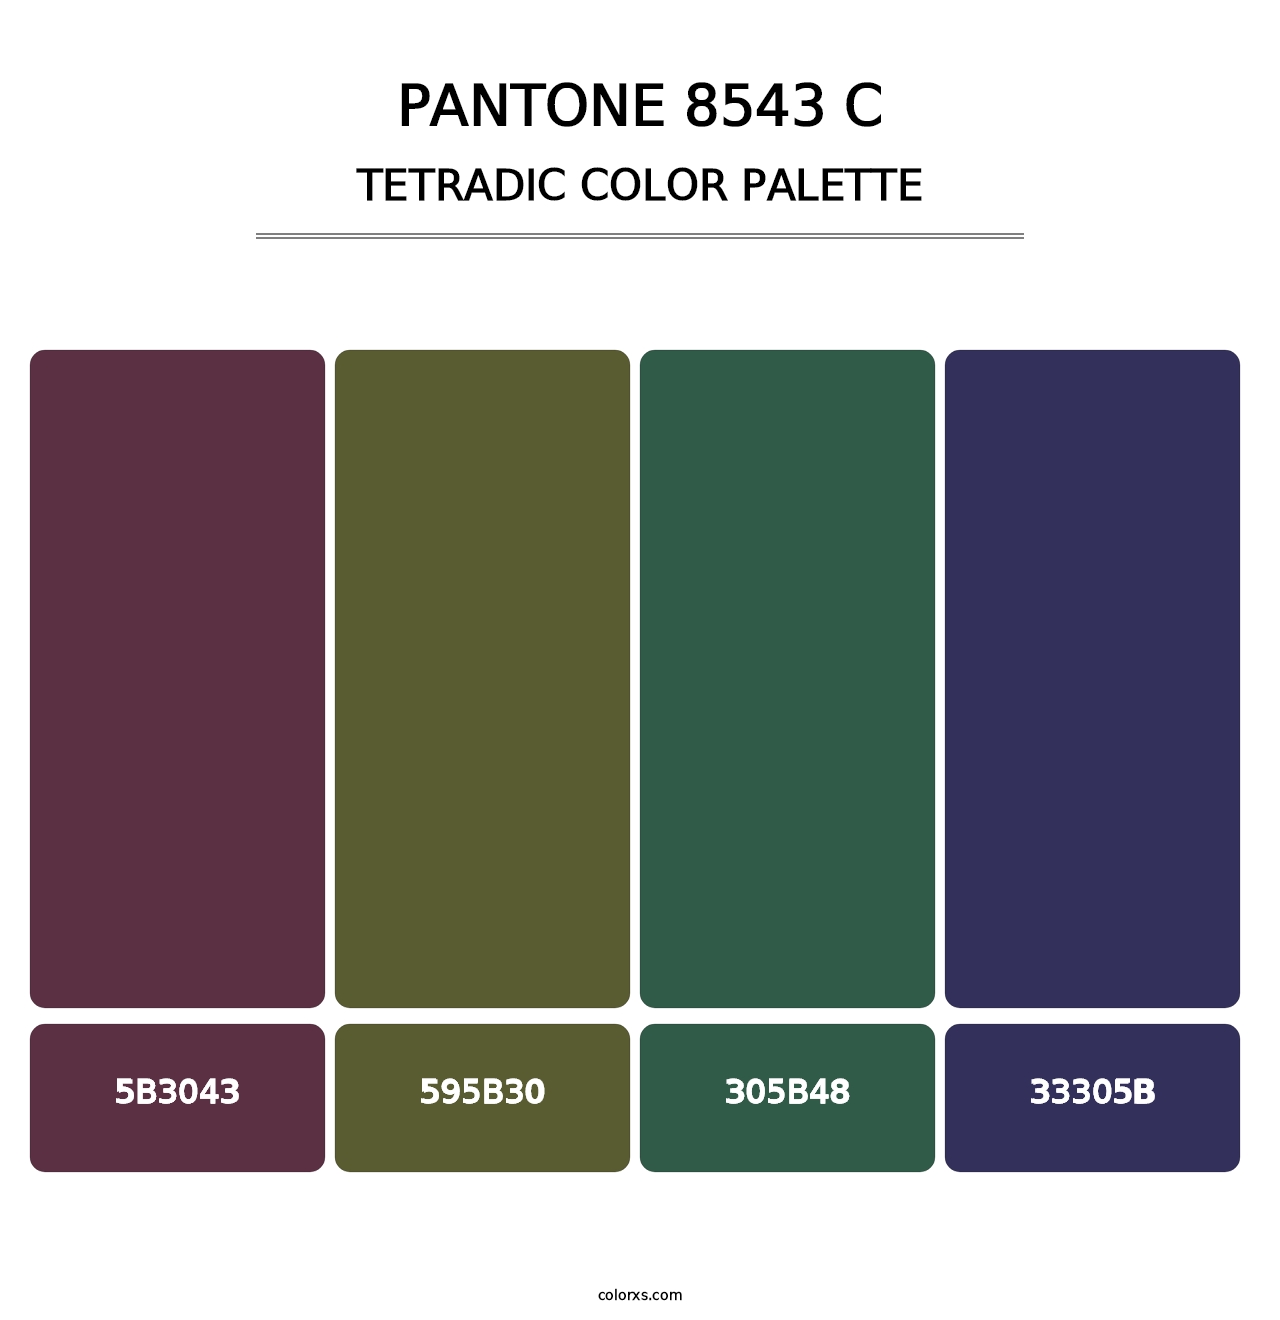 PANTONE 8543 C - Tetradic Color Palette